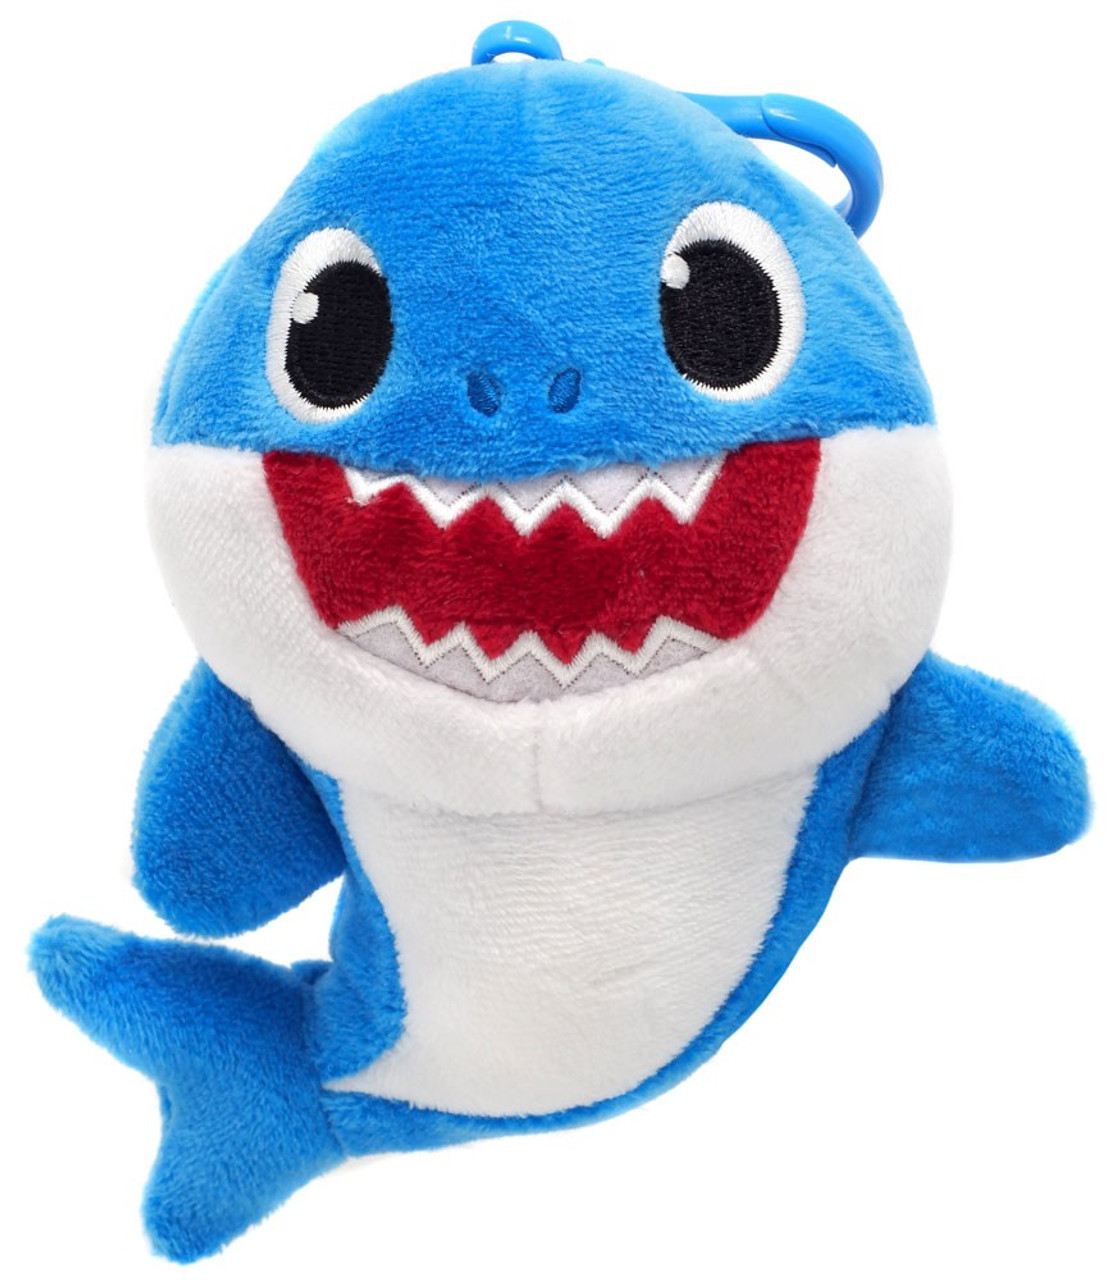 daddy shark toy